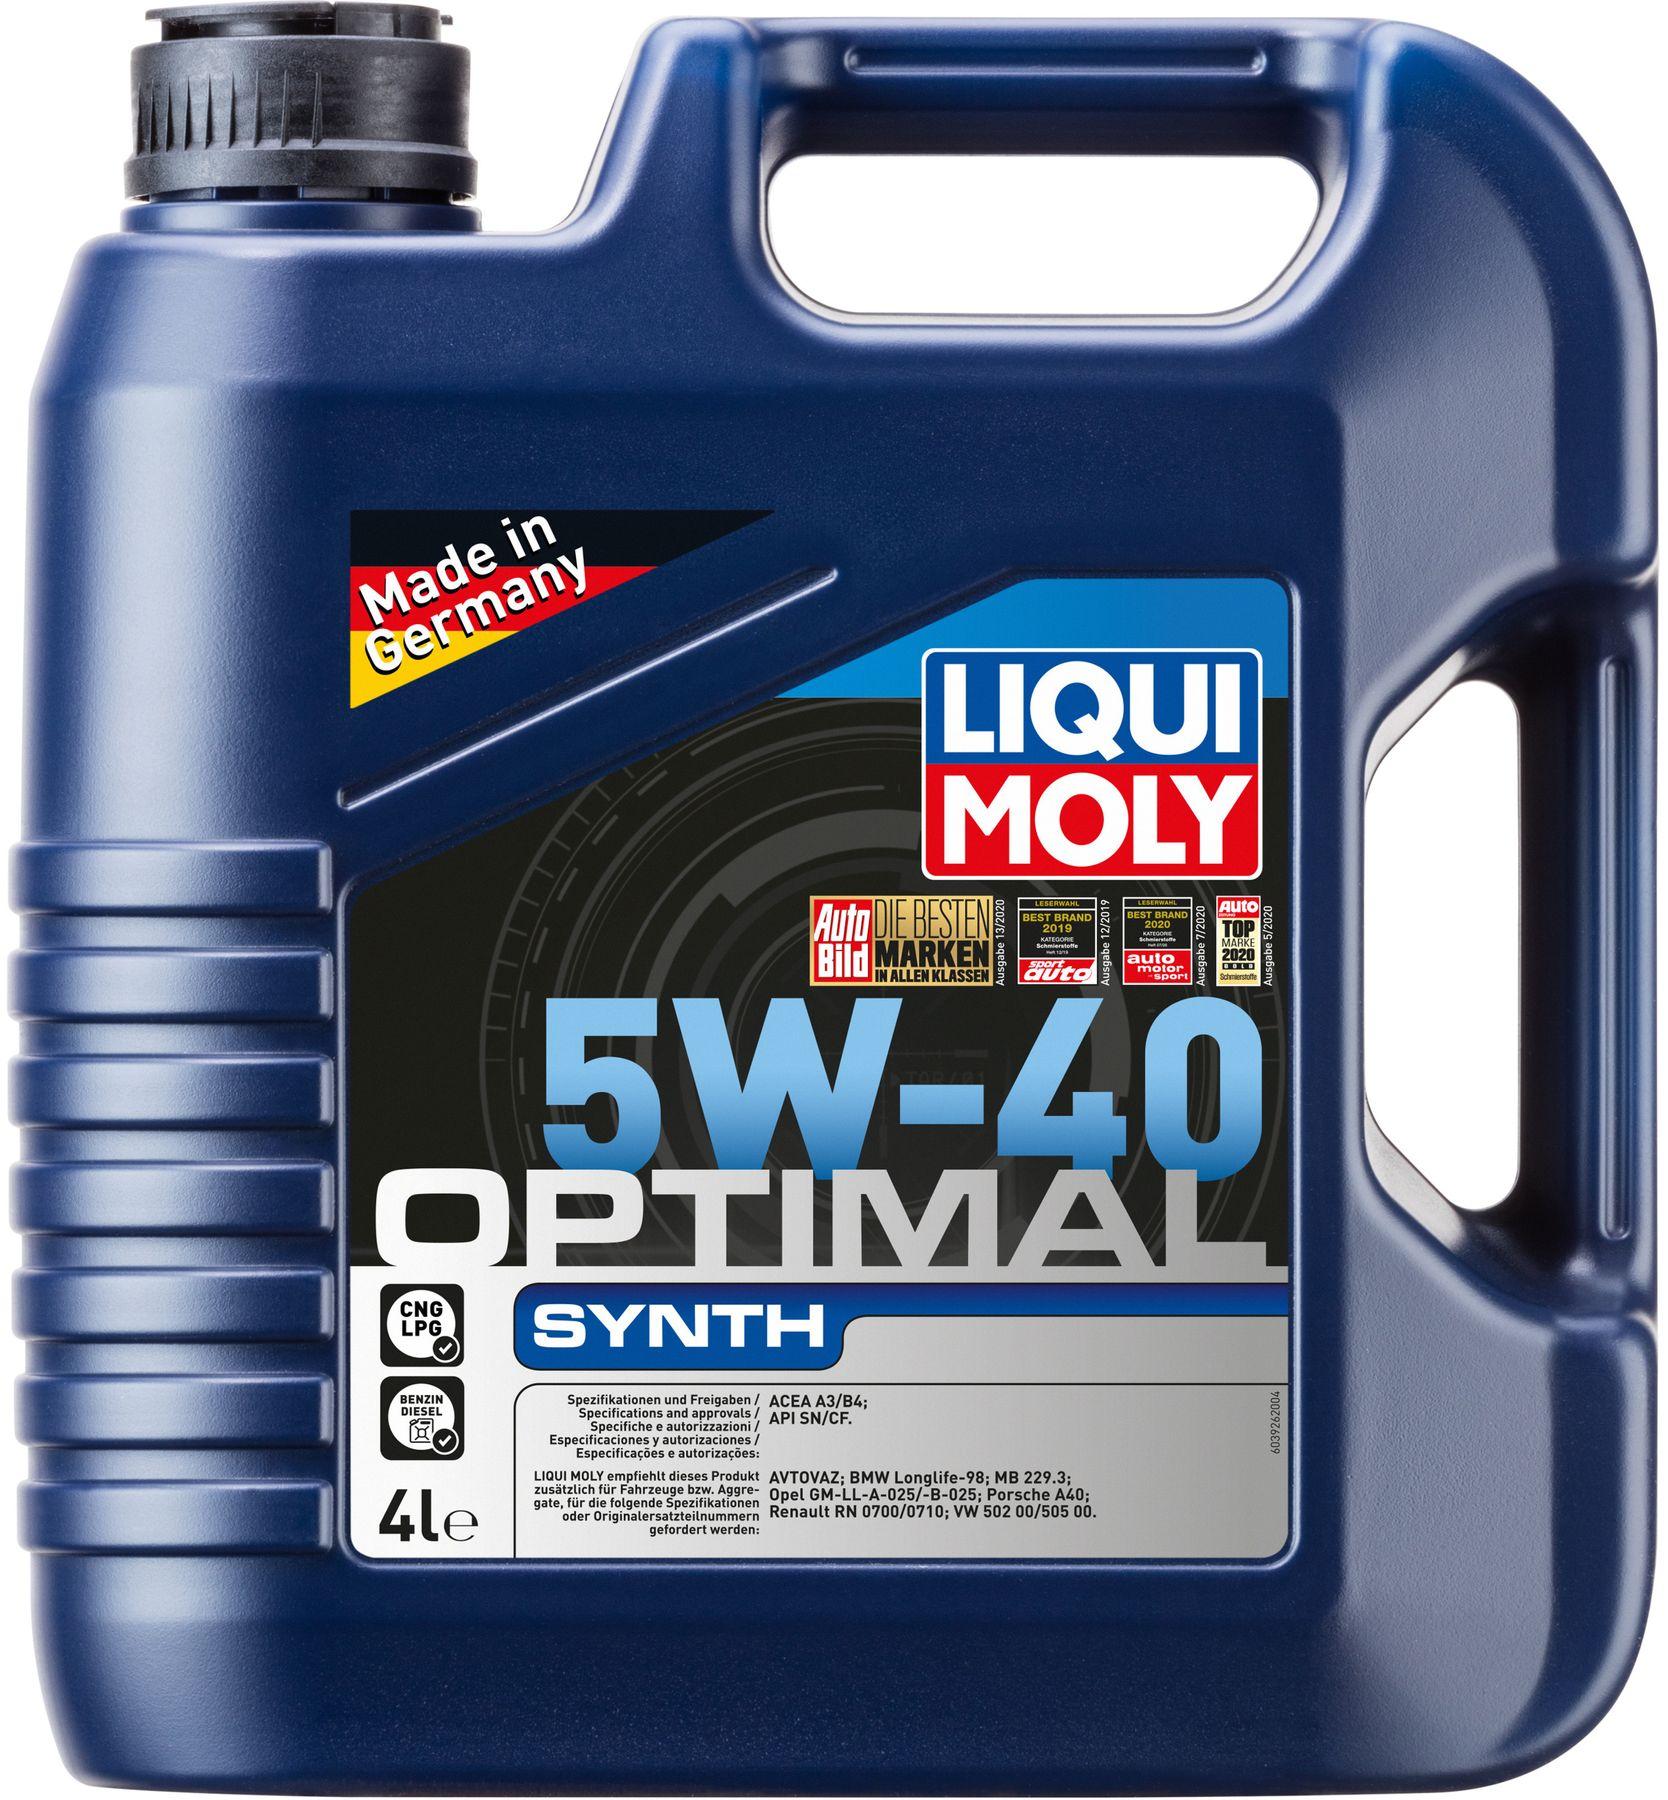 Моторное масло Liqui Moly Optimal Synth 5W-40, 4 литра (3926)